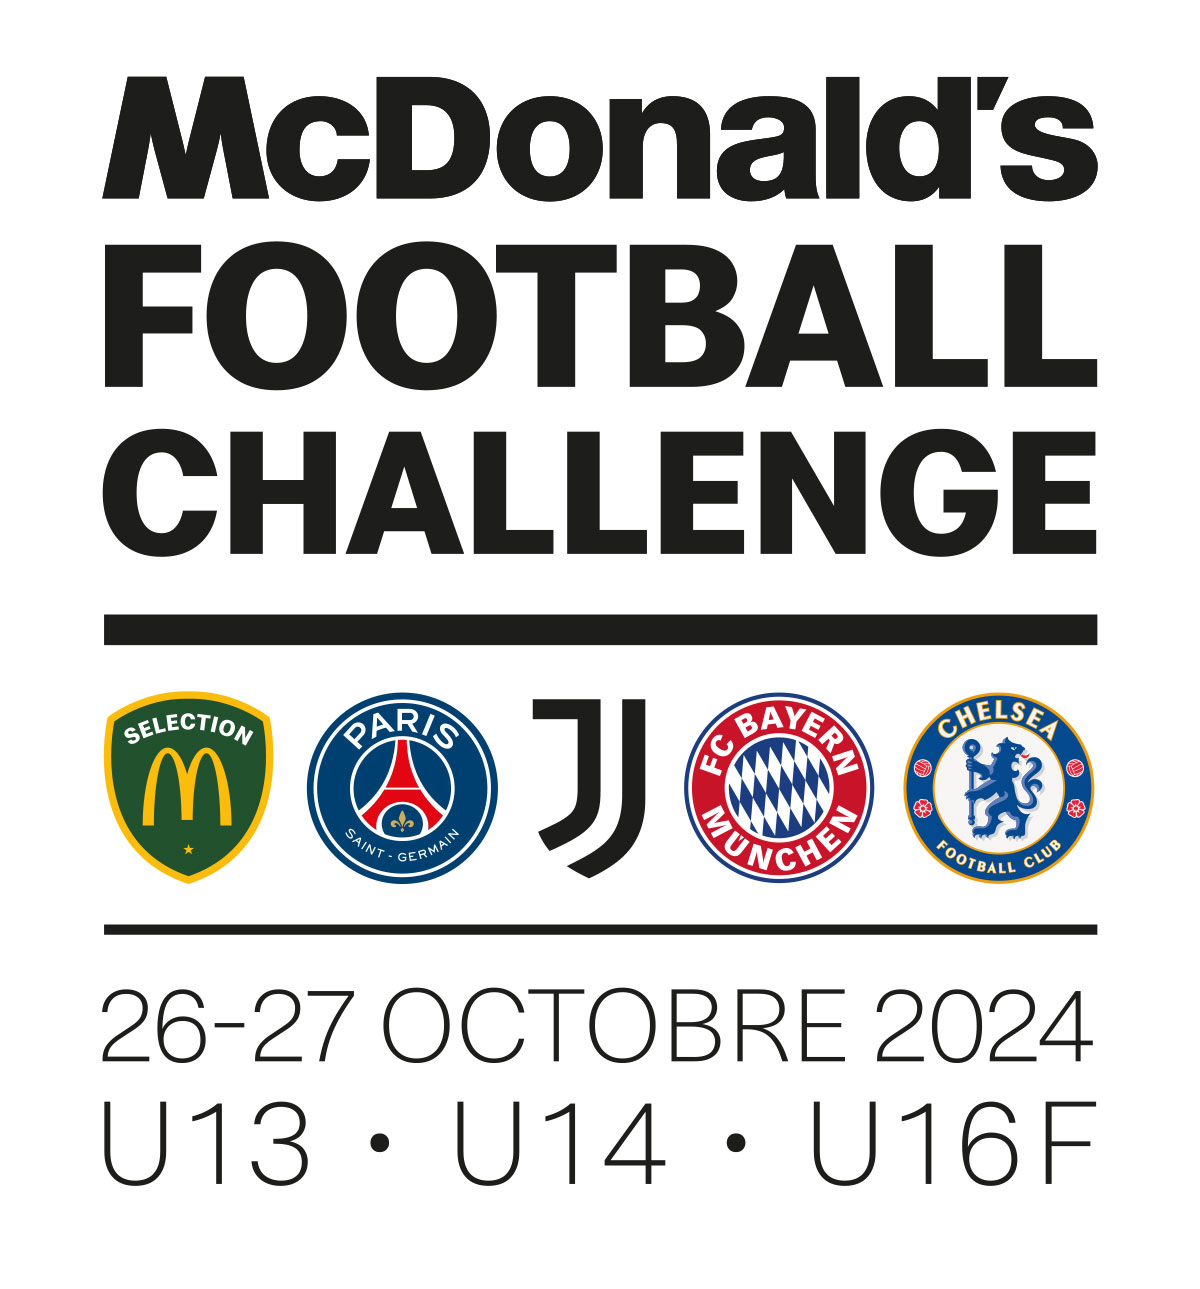 McDonald's Football Challenge